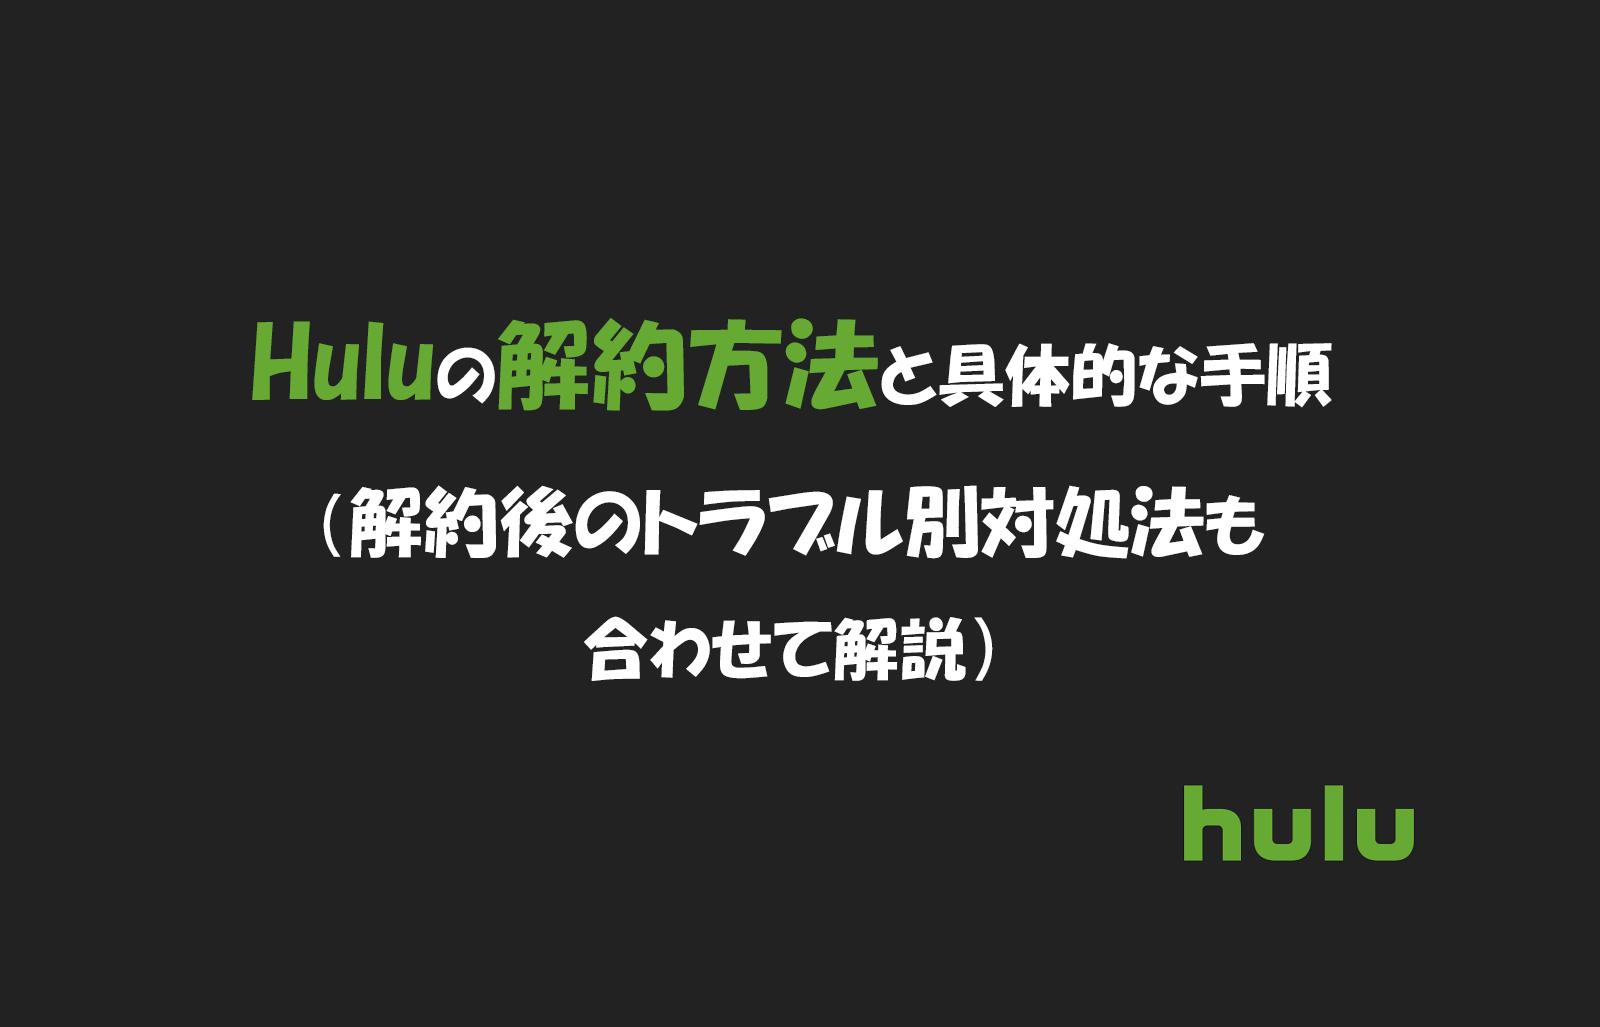 Huluの解約方法 退会前の注意点やアカウントを完全に削除する方法も合わせて解説 30s Magazine サンジュウマガジン